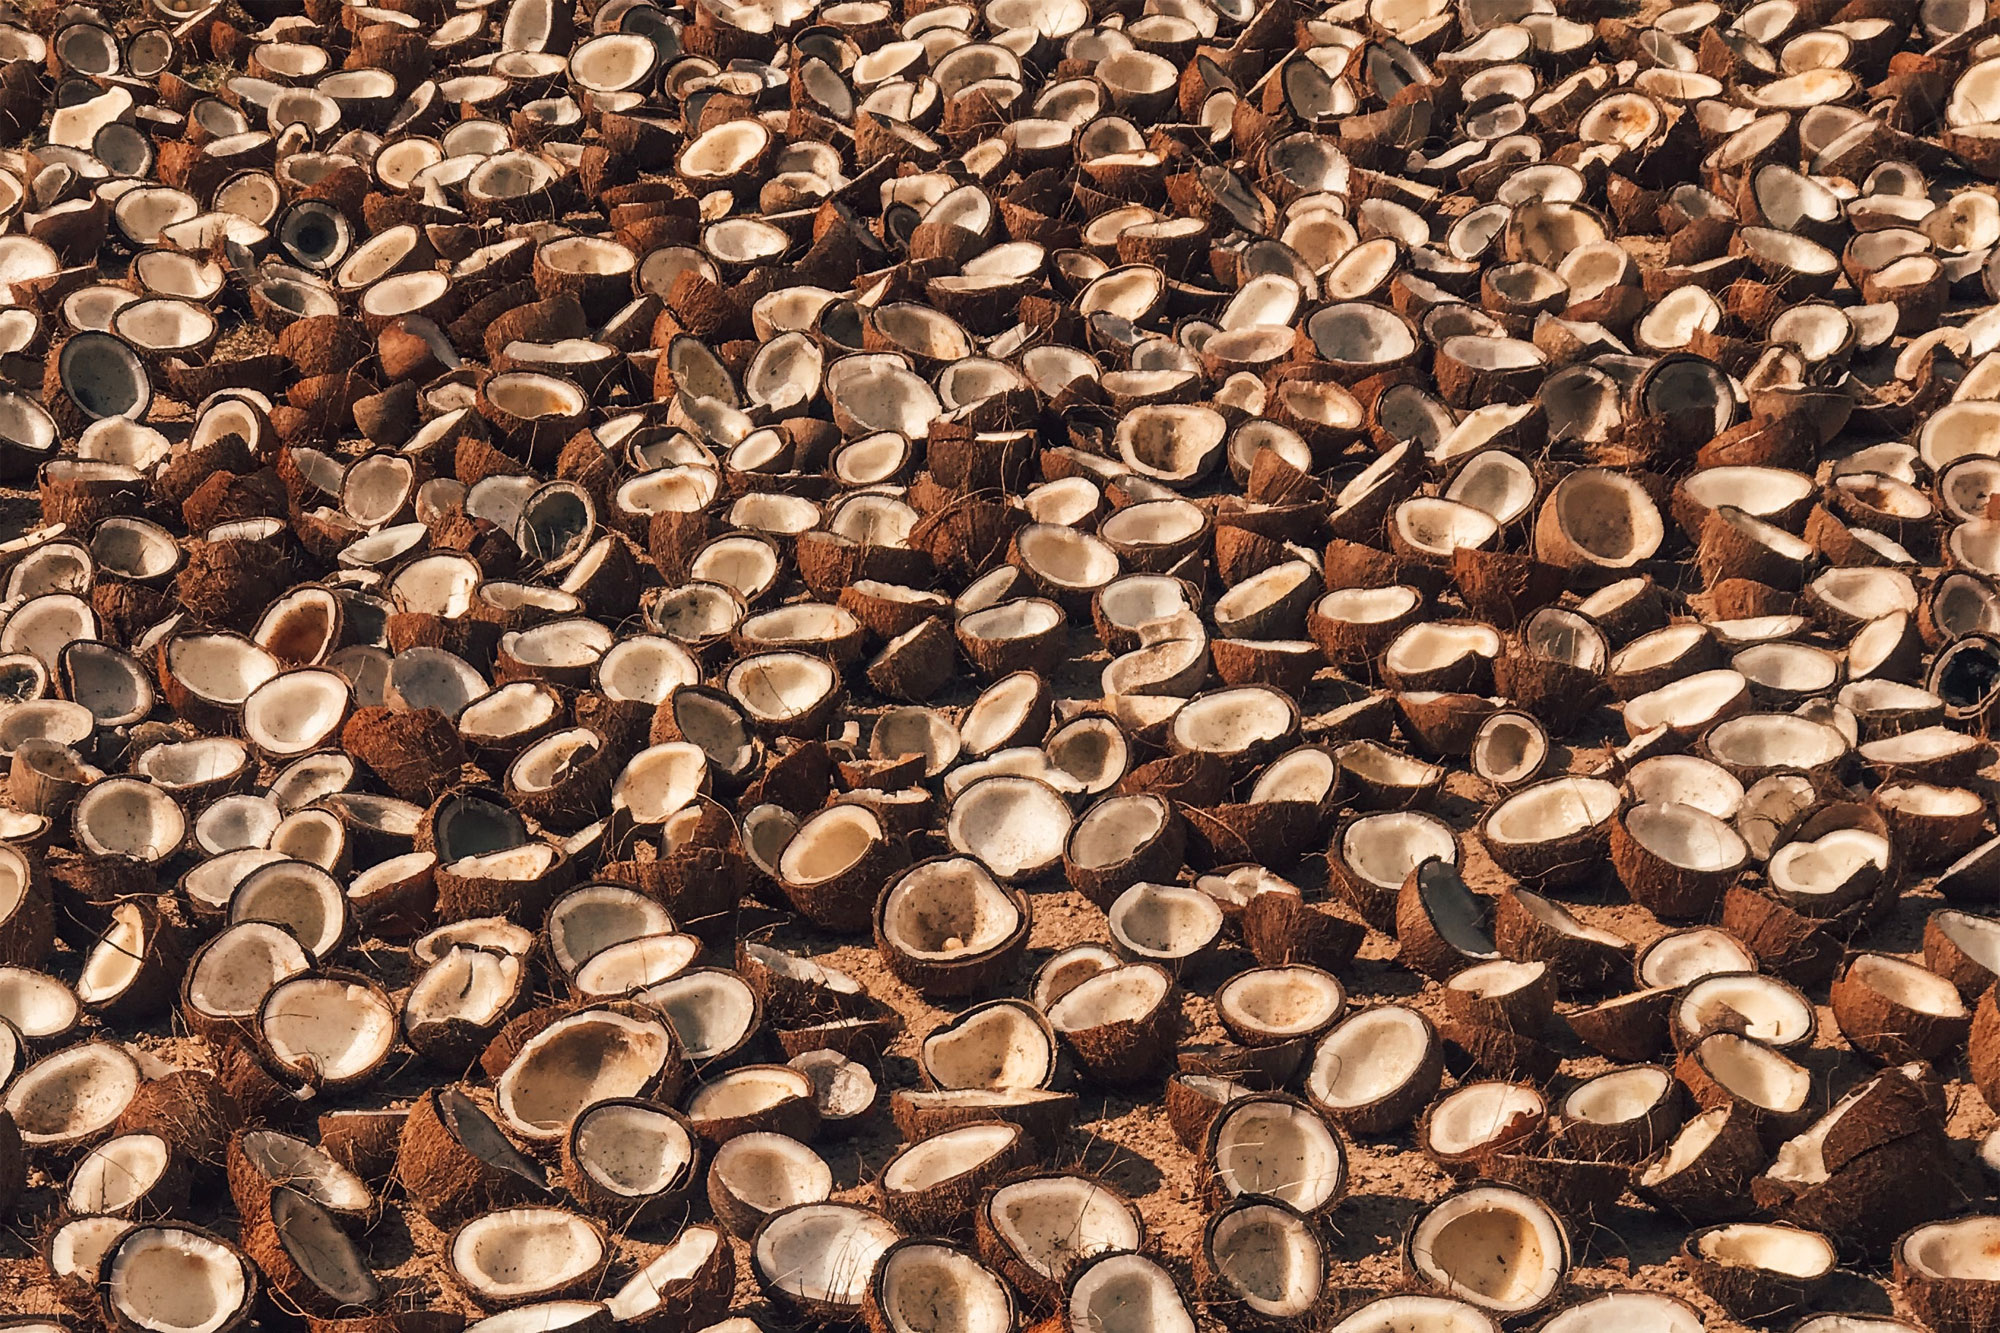 Field of empty, halved coconut shells